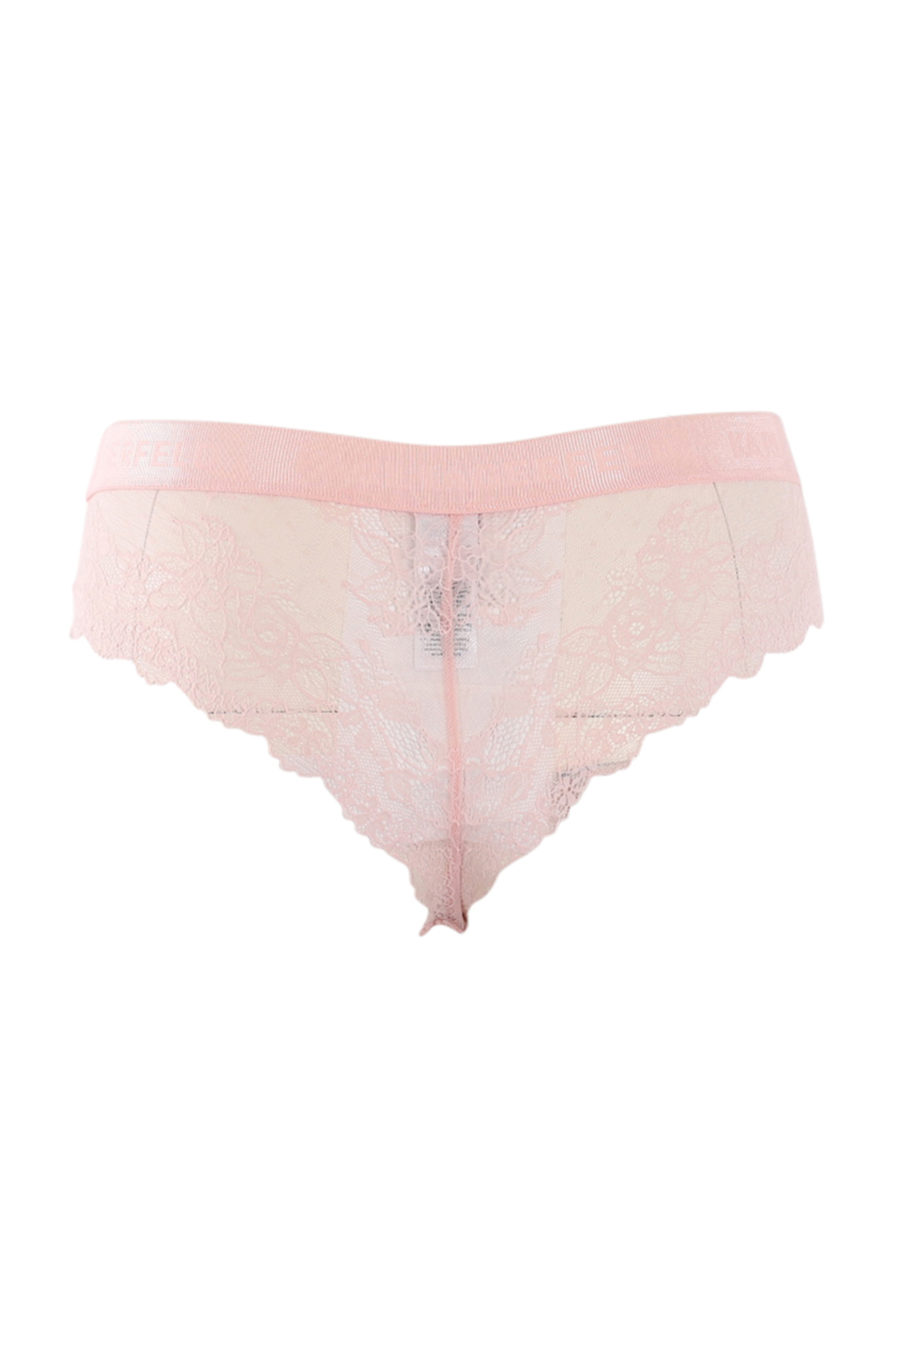 Pink panties in lace - IMG 0599